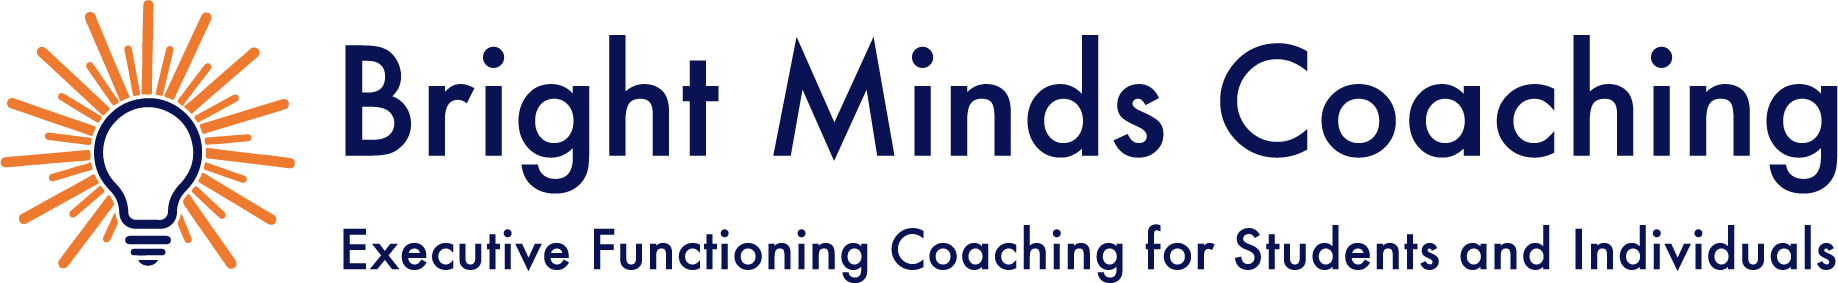 Bright Minds Coaching